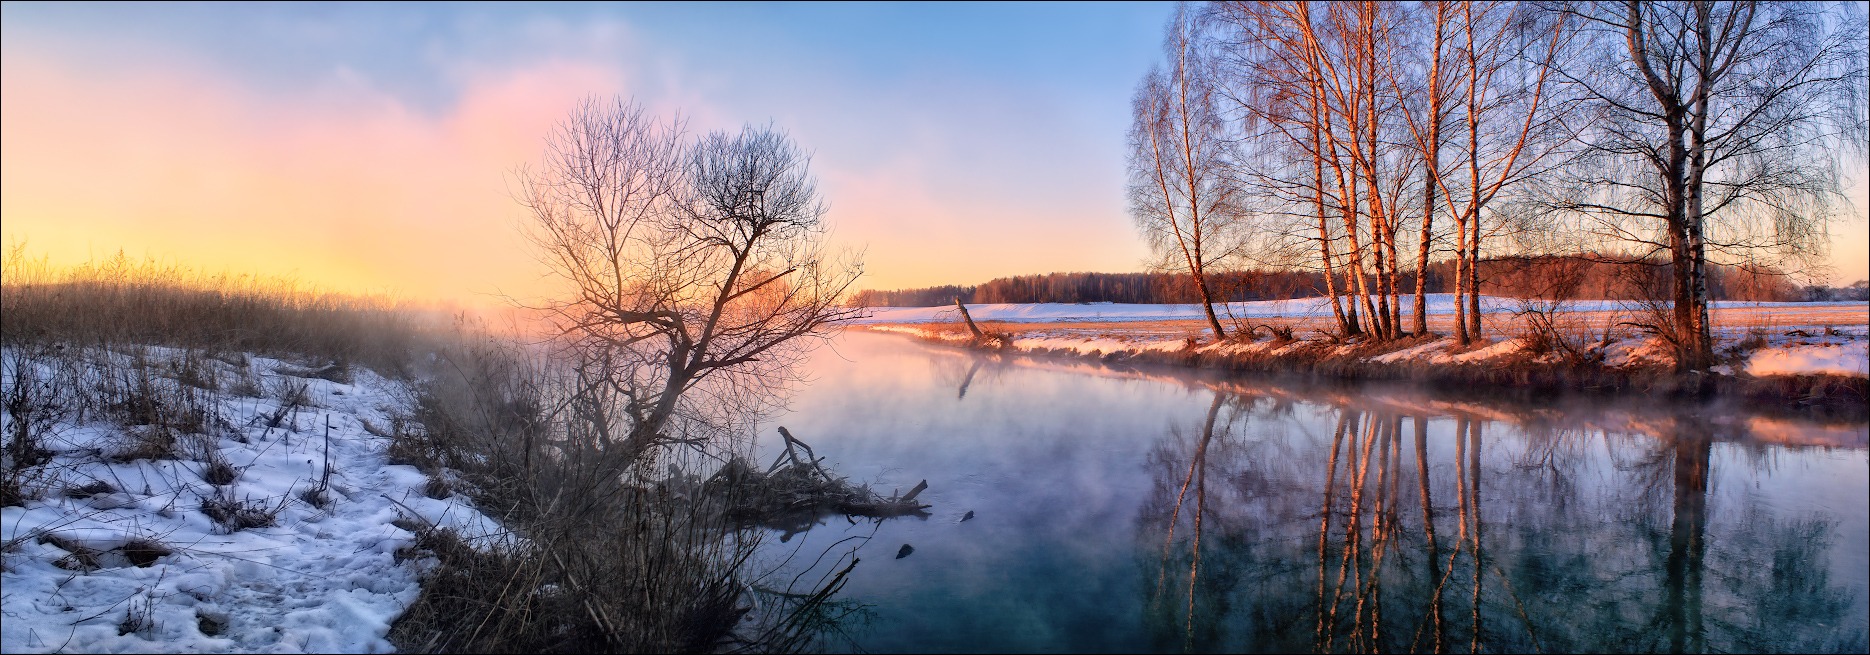 Конец зимы | Фотограф Сергей Шабуневич | foto.by фото.бай